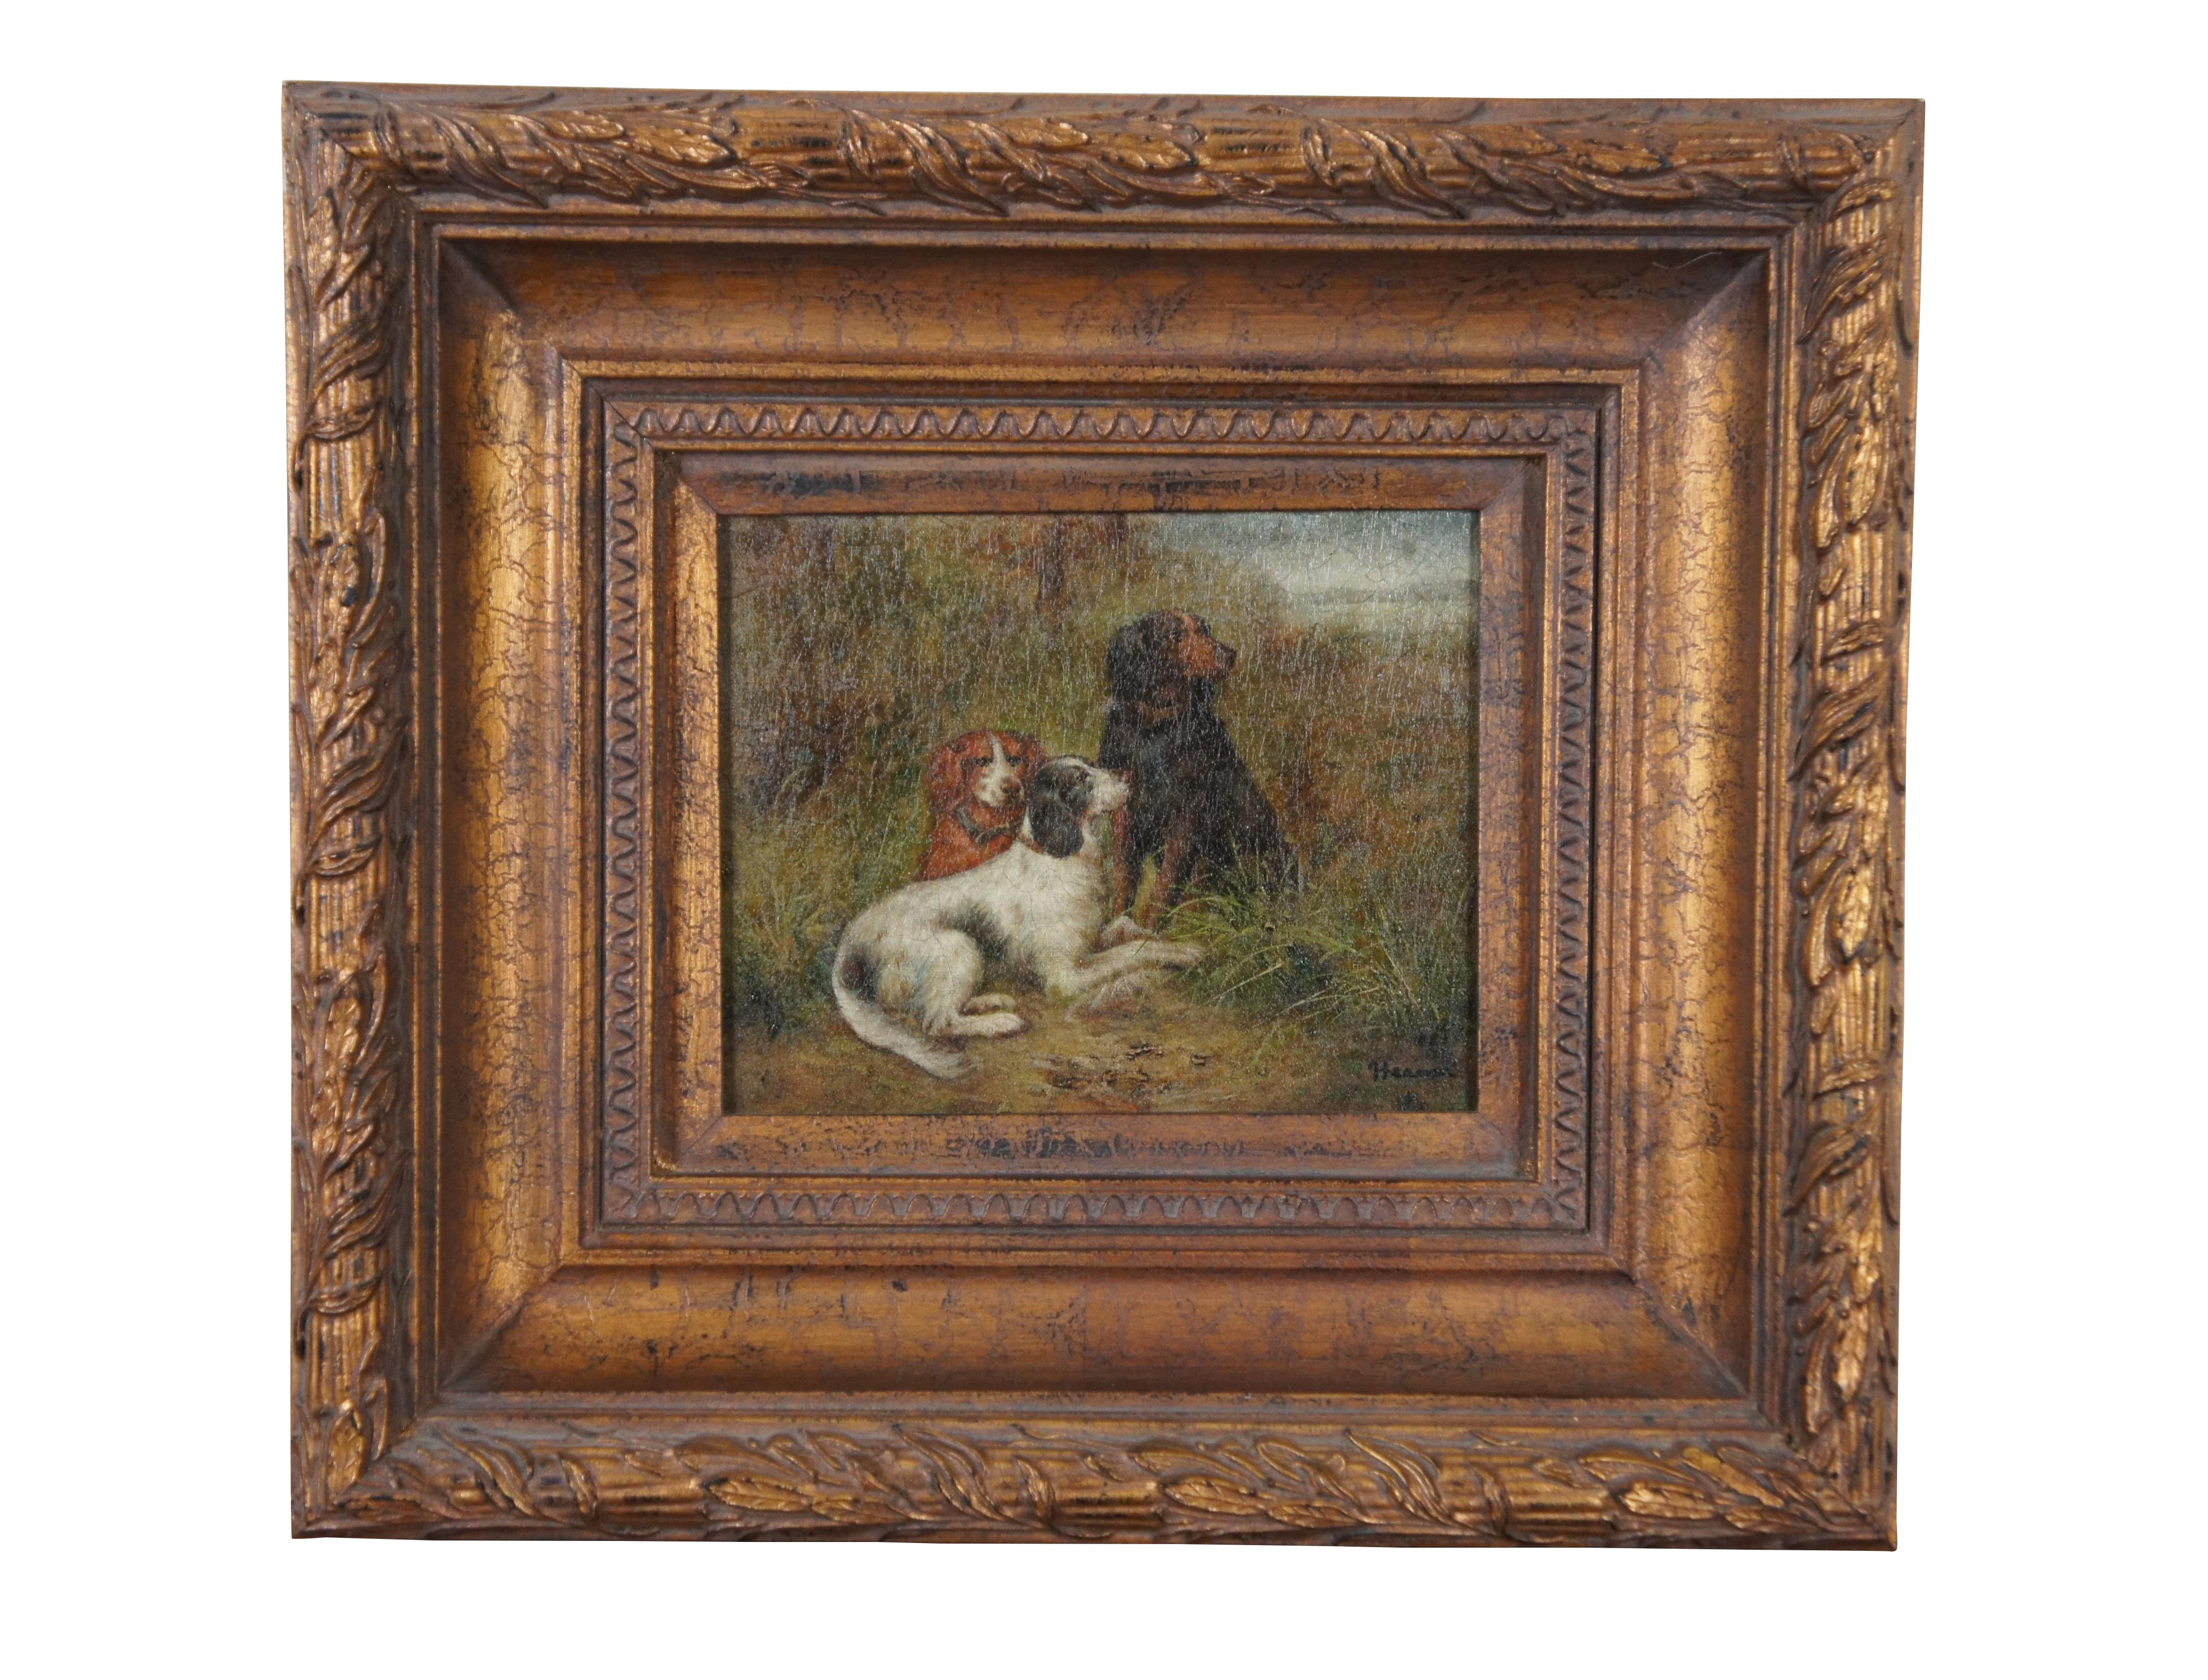 2 Vintage Spaniel Dog Portrait Oil Paintings on Canvas Gold Frames 20